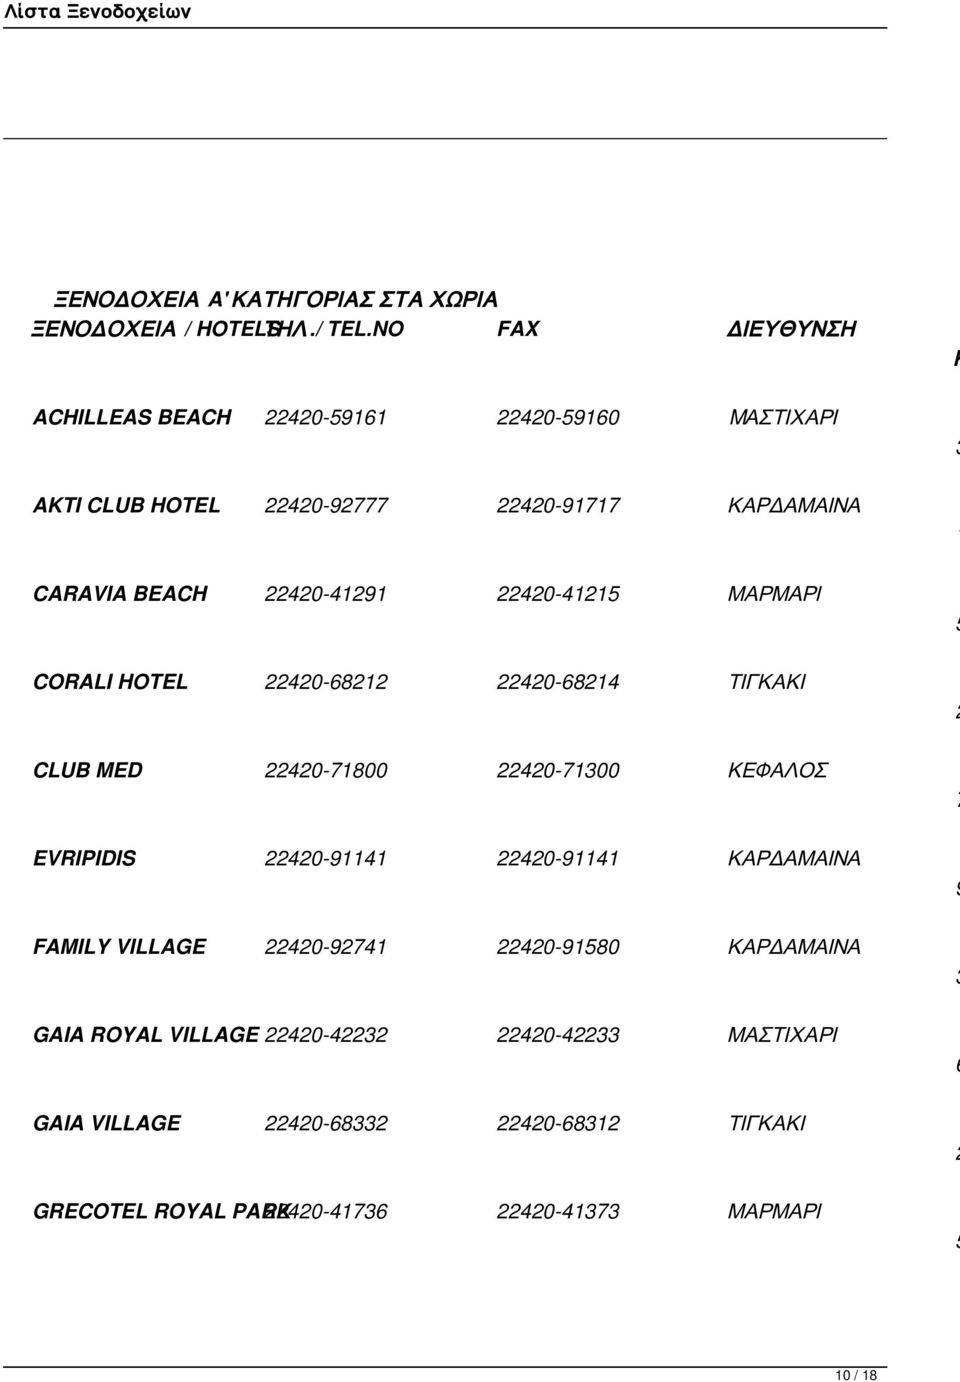 BEACH 0-9 0- ΜΑΡΜΑΡΙ CORALI HOTEL 0-0- ΤΙΓΚΑΚΙ CLUB MED 0-00 0-00 ΚΕΦΑΛΟΣ EVRIPIDIS 0-9 0-9